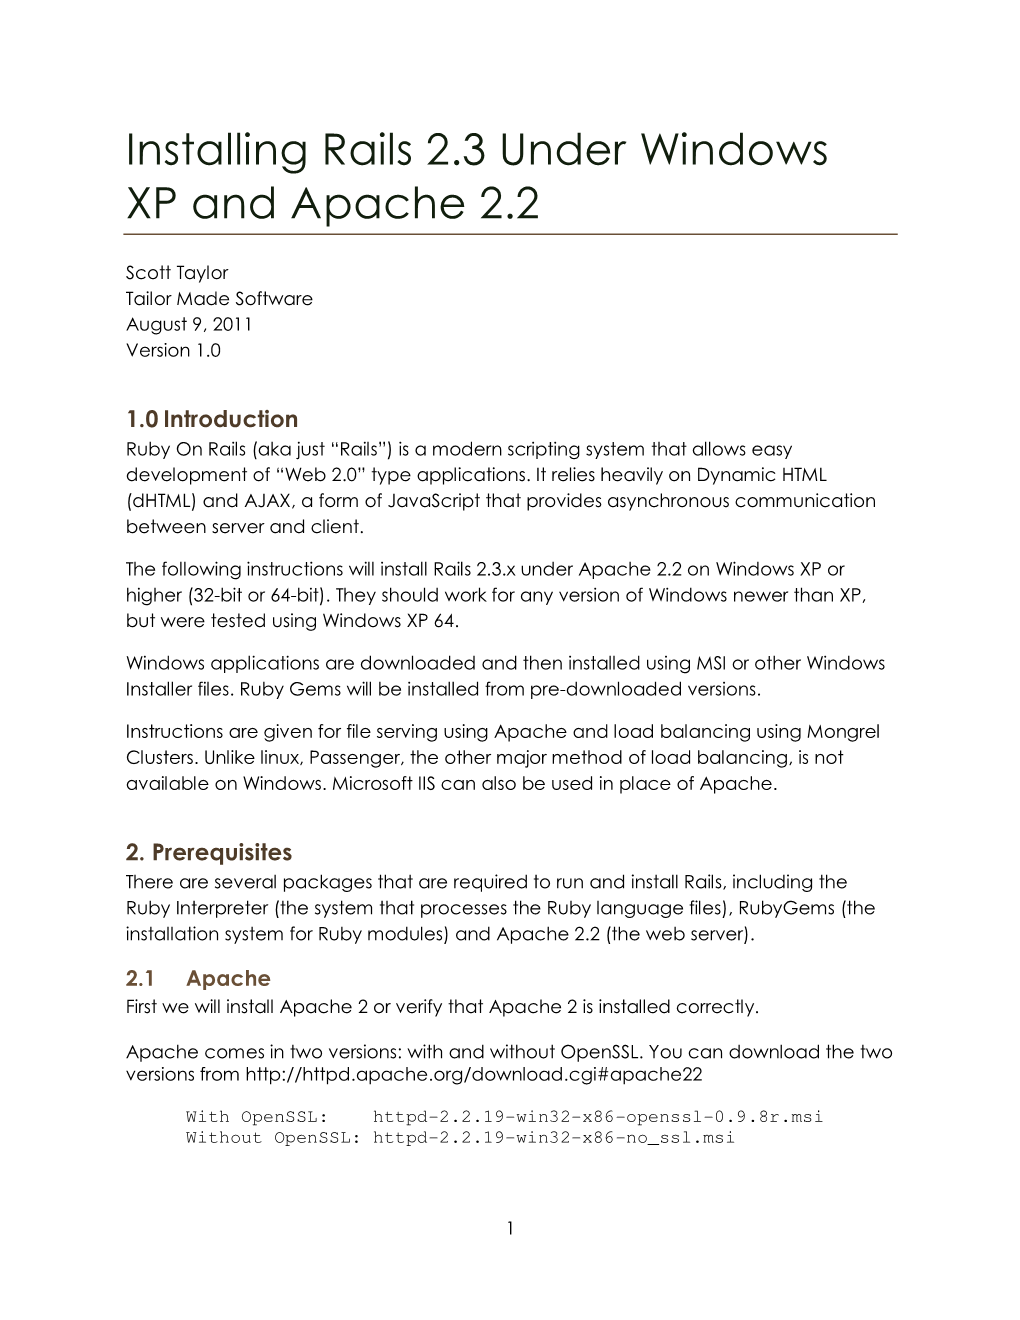 Installing Rails 2.3 Under Windows XP and Apache 2.2